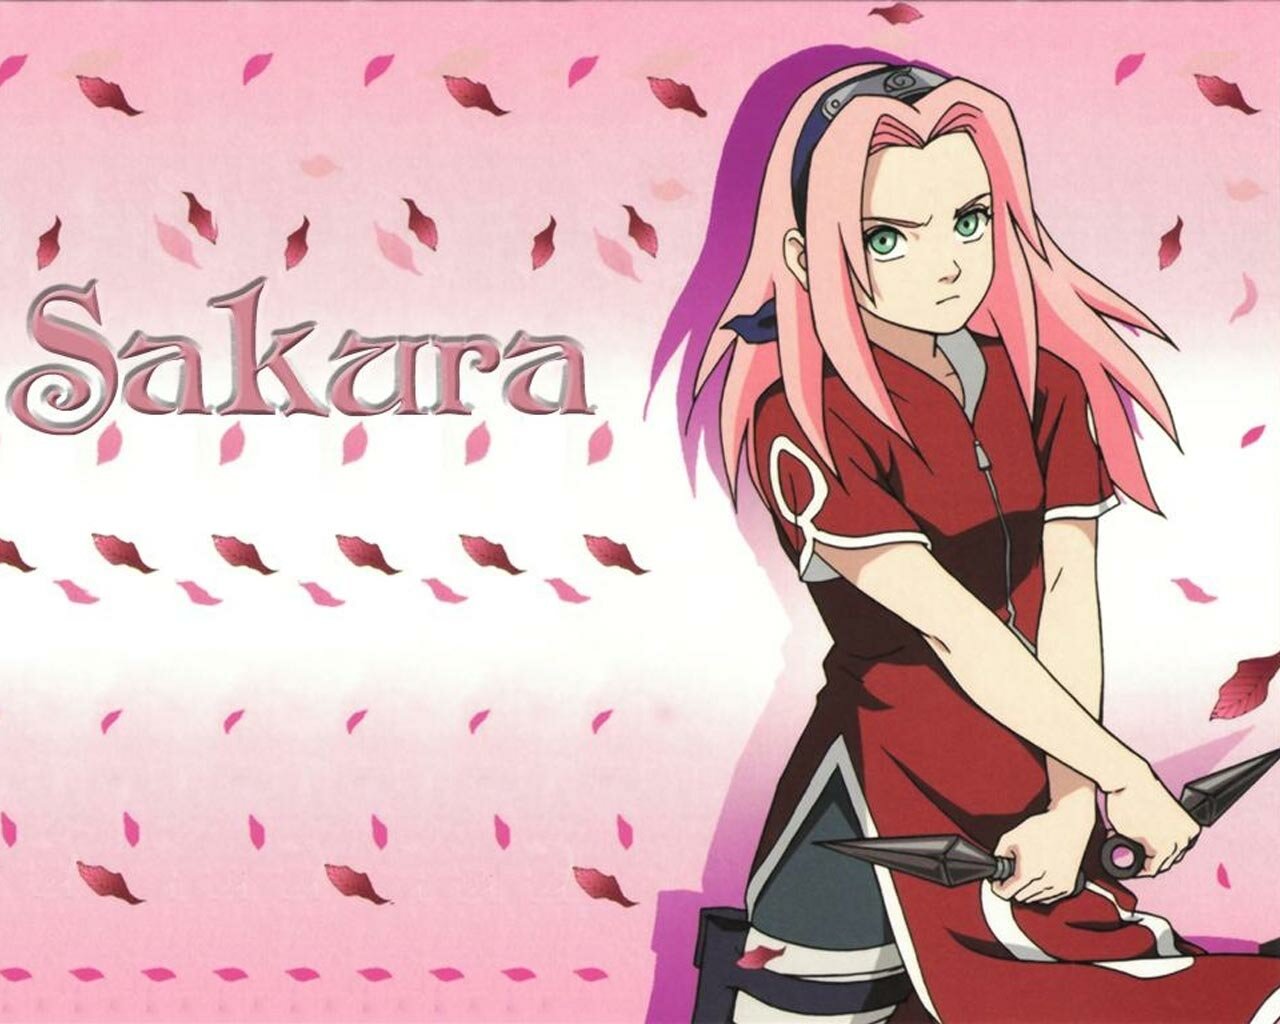 You are viewing the Naruto wallpaper named Sakura.